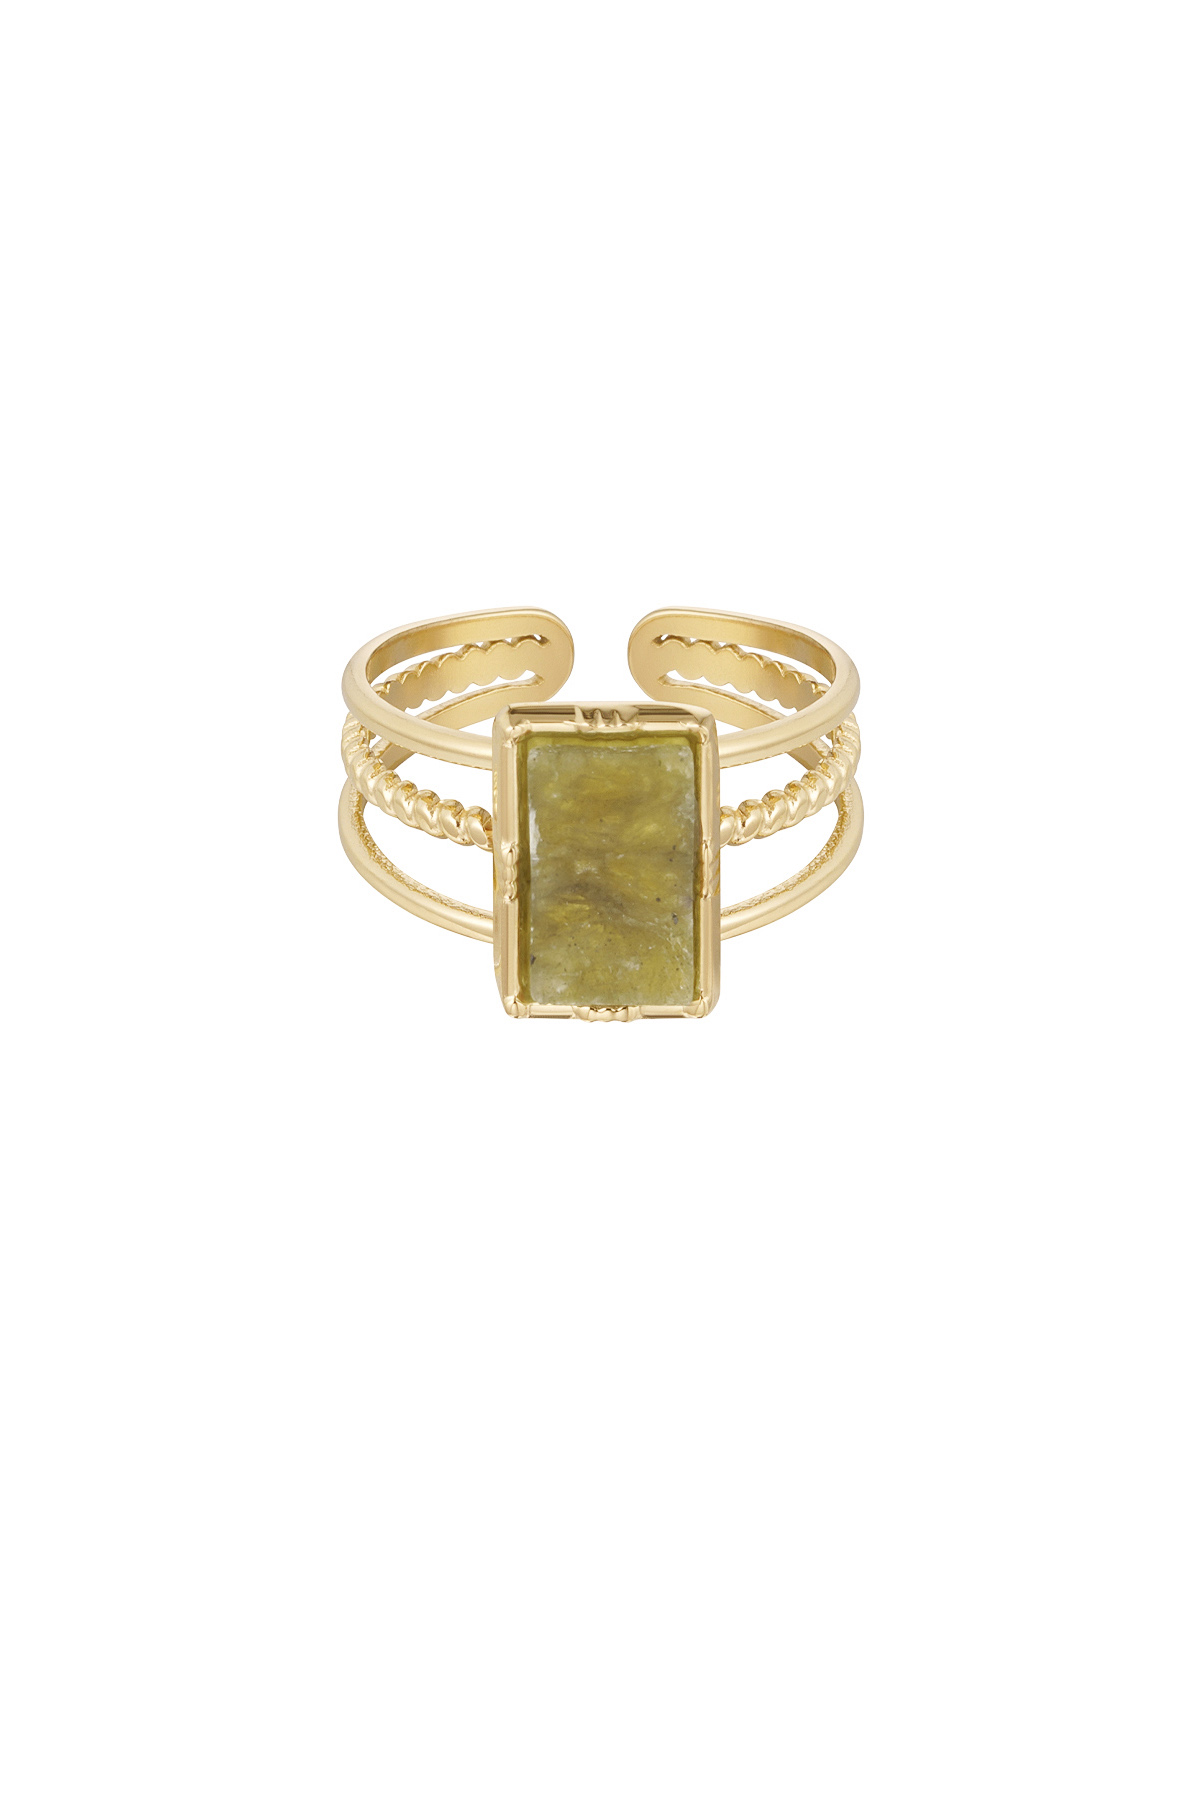 Ring drie laags rechthoekige steen - goud/groen